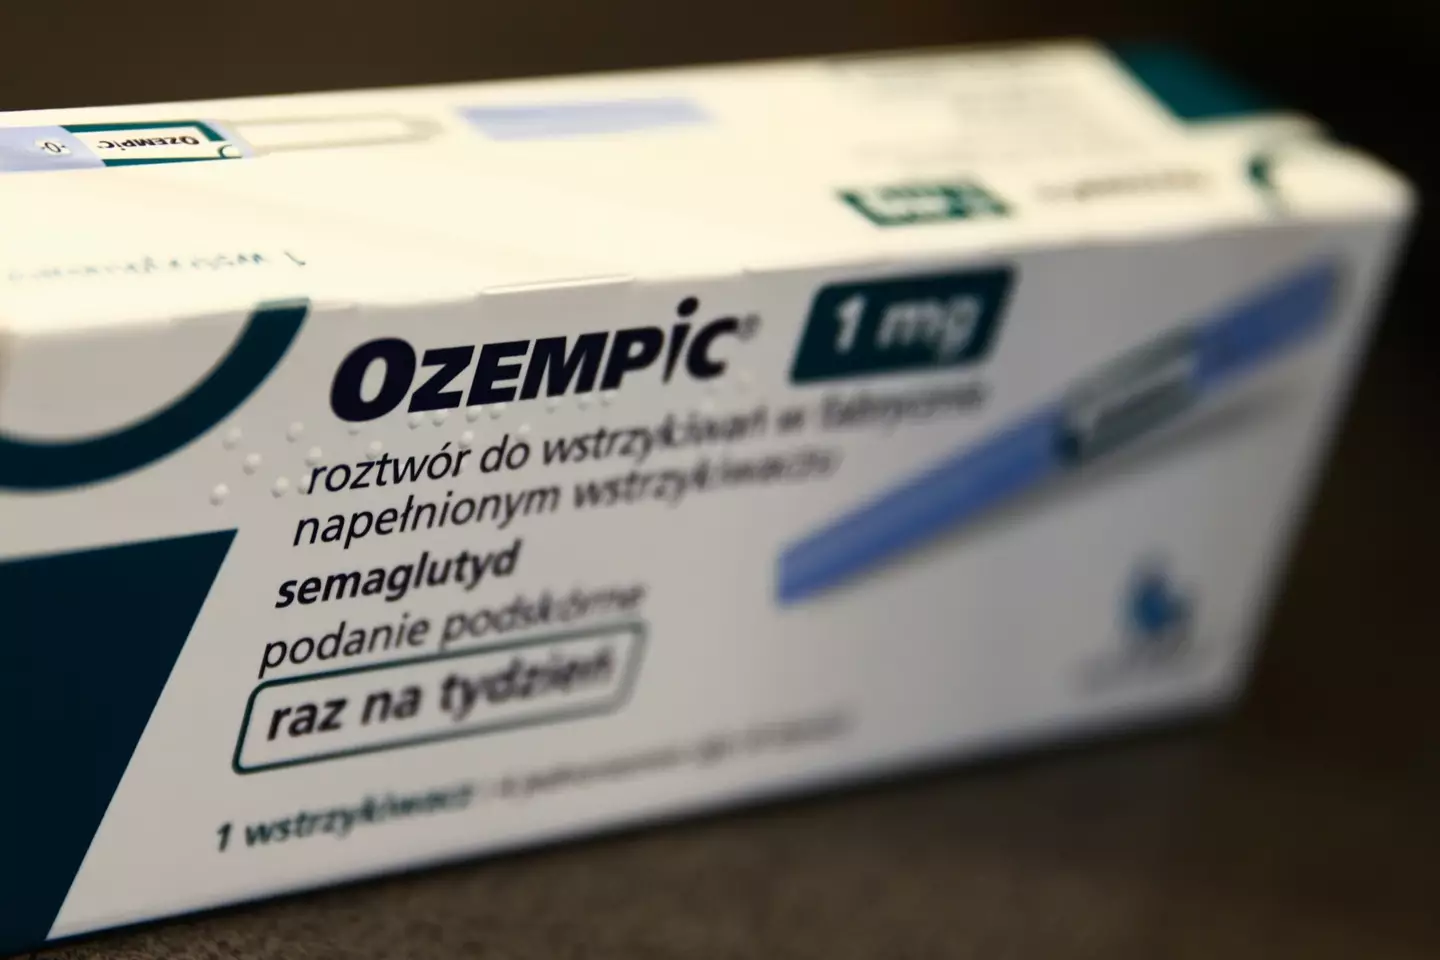 Ozempic is used to treat Type 2 diabetes and obesity. (Jakub Porzycki/NurPhoto via Getty Images)